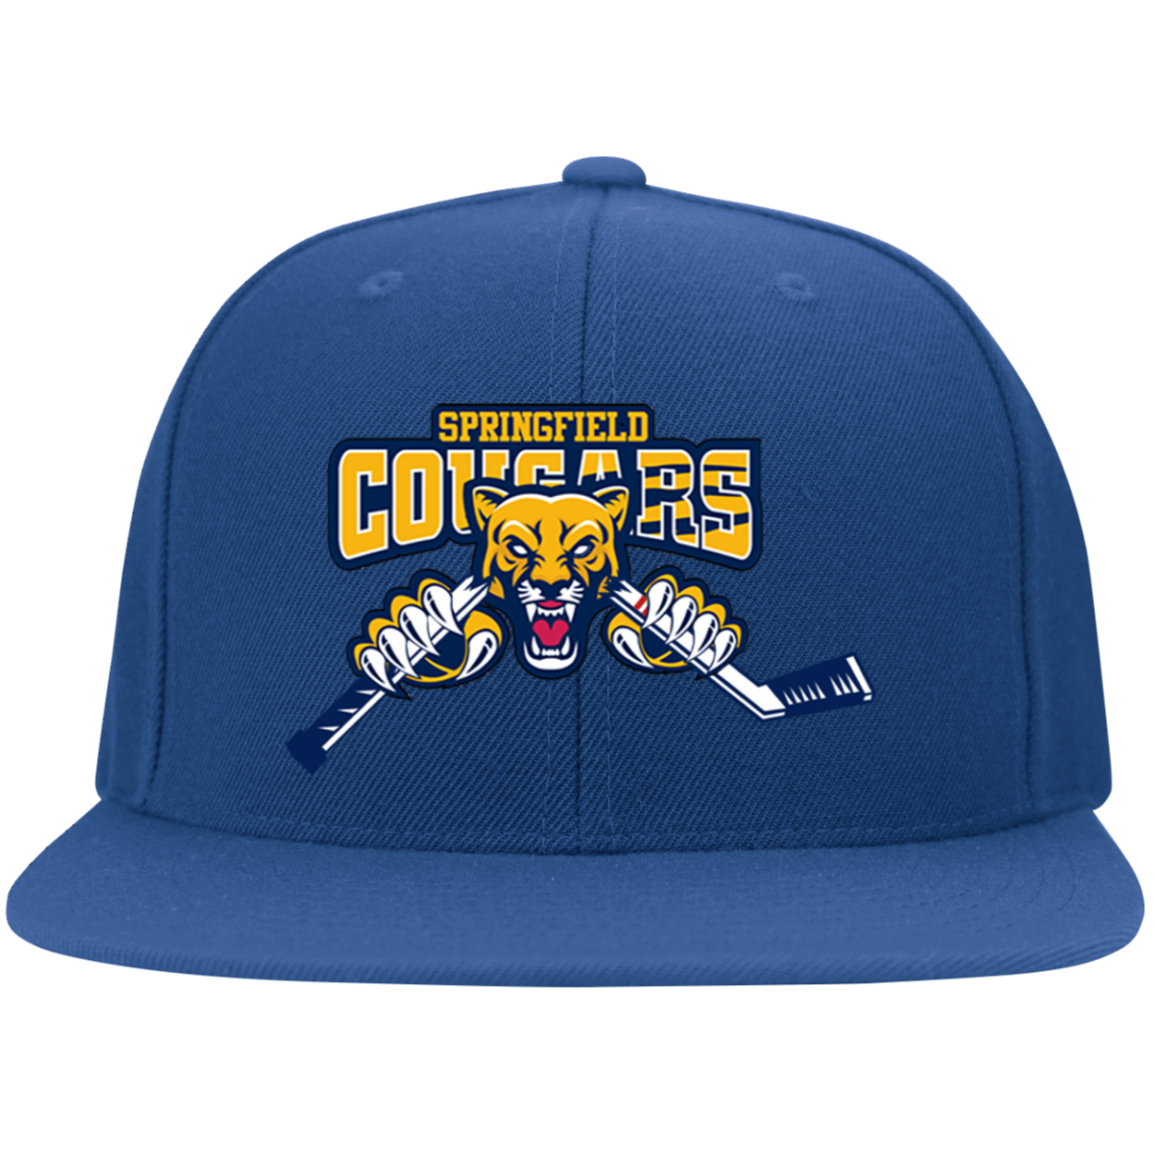 Cougars Hockey Embroidered Flat Bill Twill Flexfit Cap